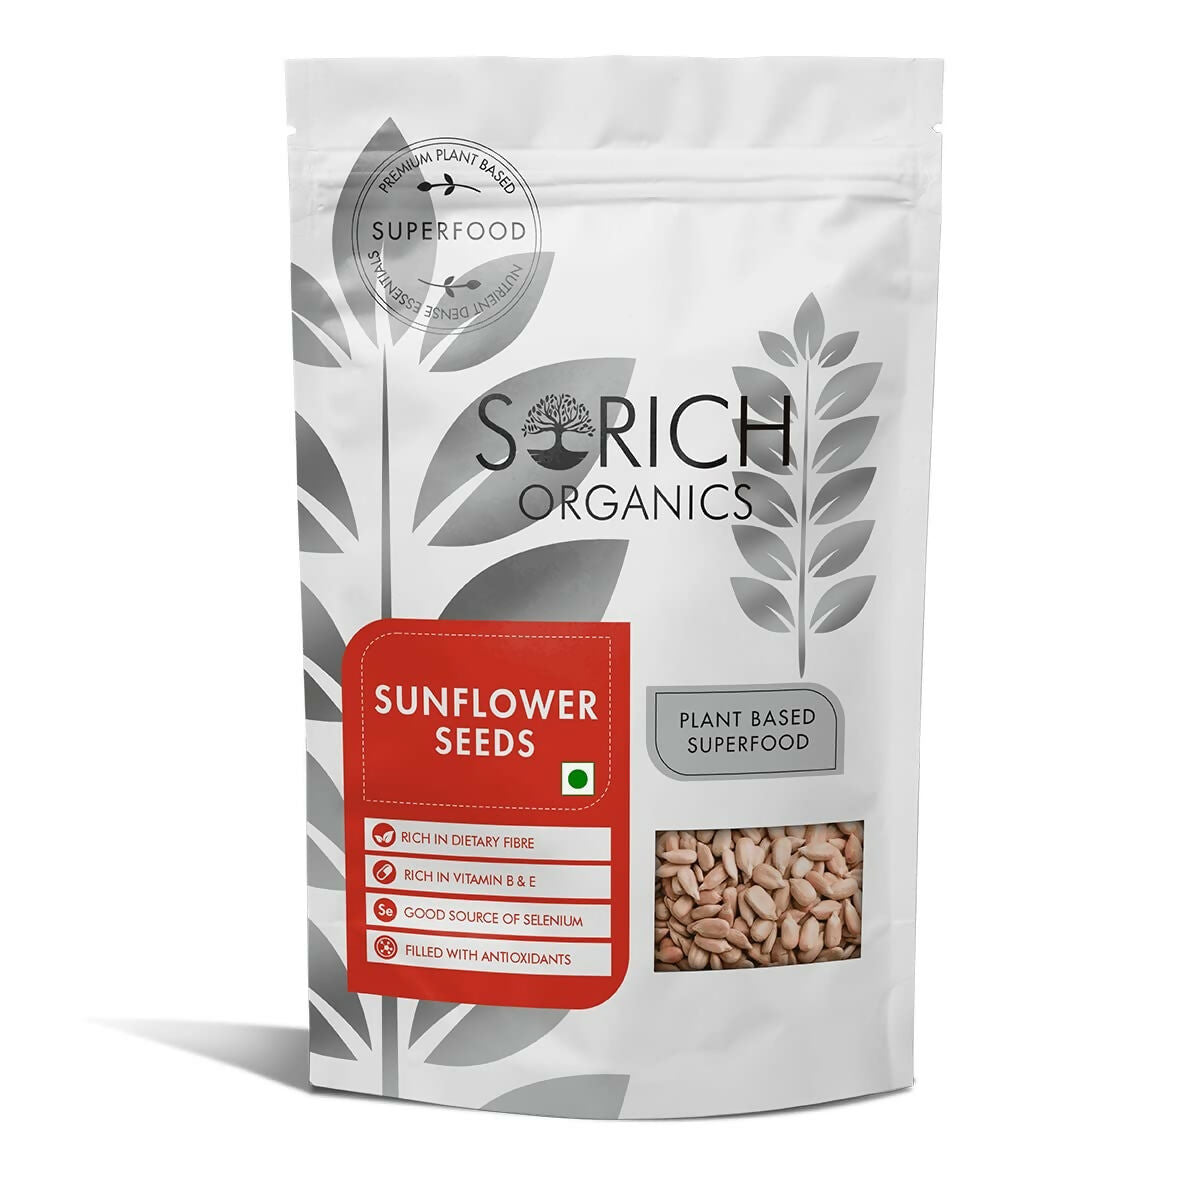 Sorich Organics Raw USDA Organic Sunflower Seeds - BUDNE